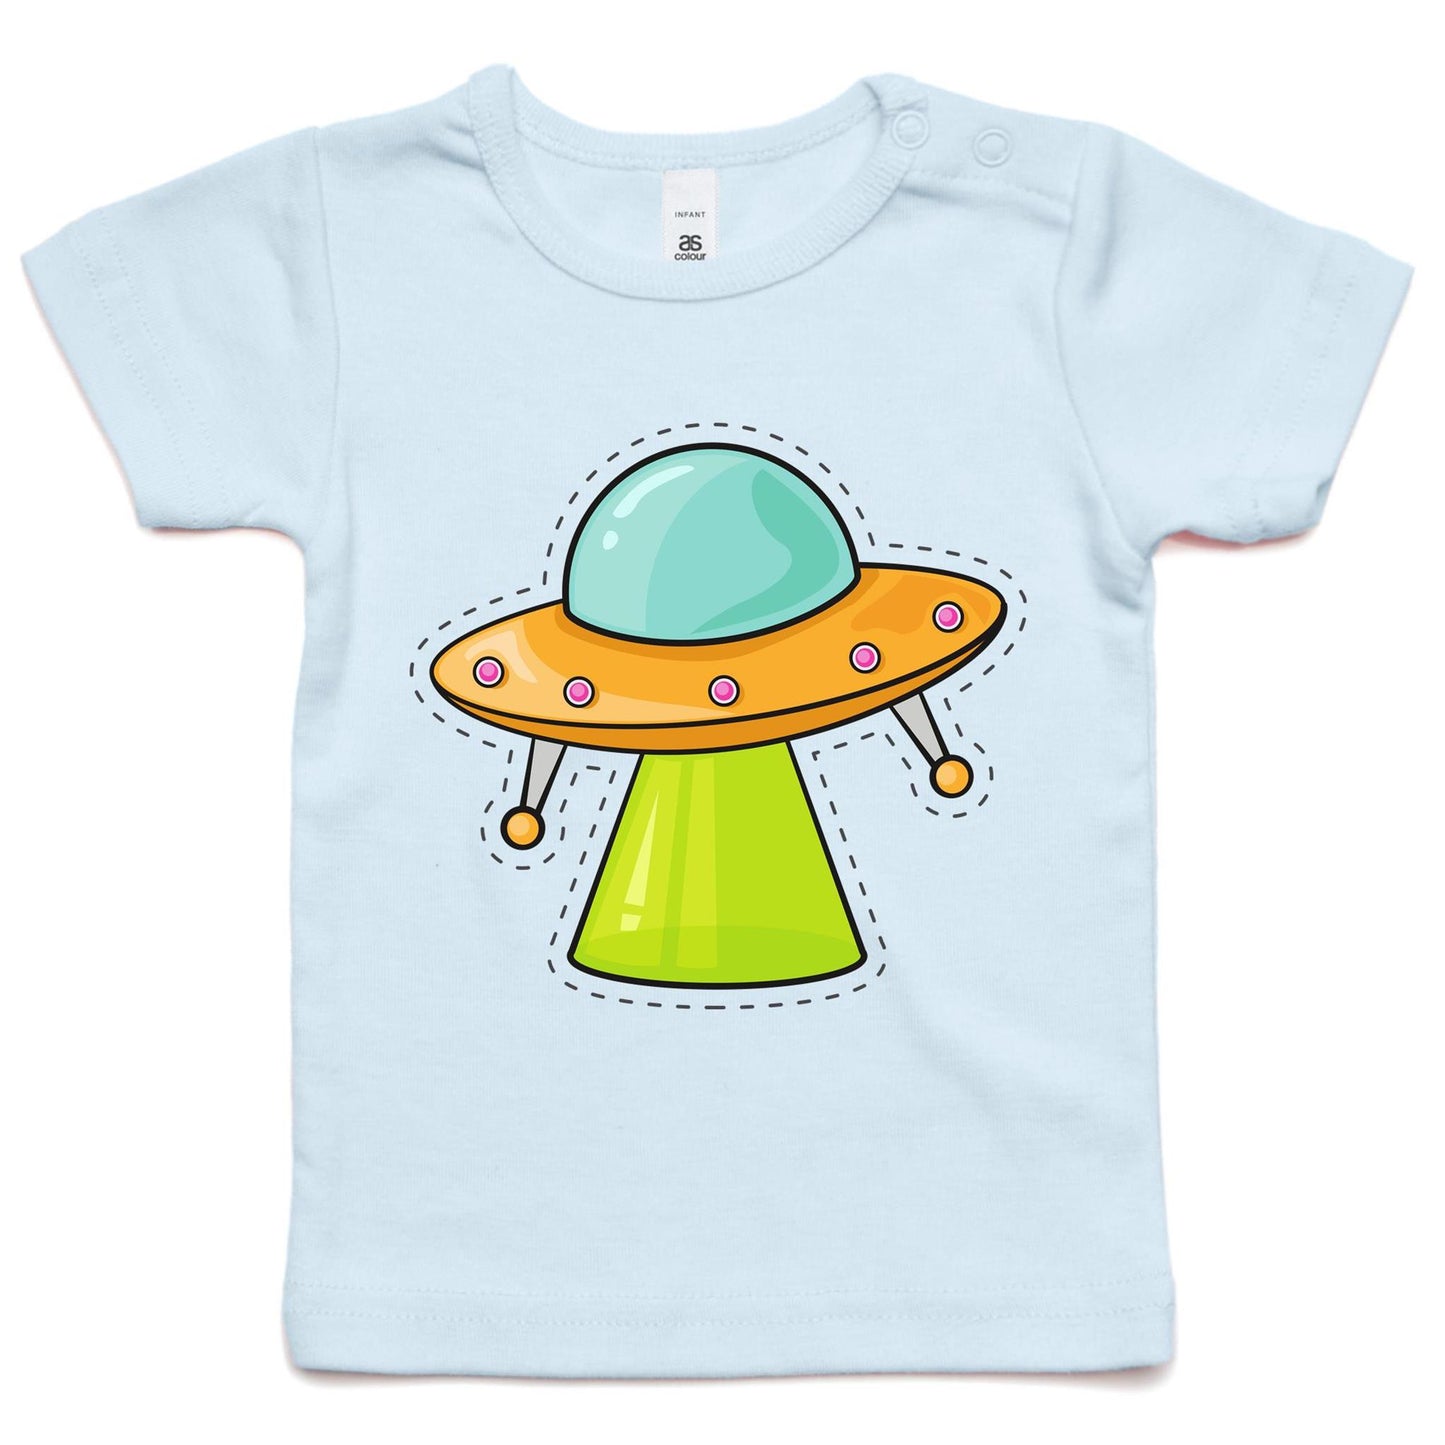 Alien UFO - Baby T-shirt Powder Blue Baby T-shirt kids Retro Sci Fi Space